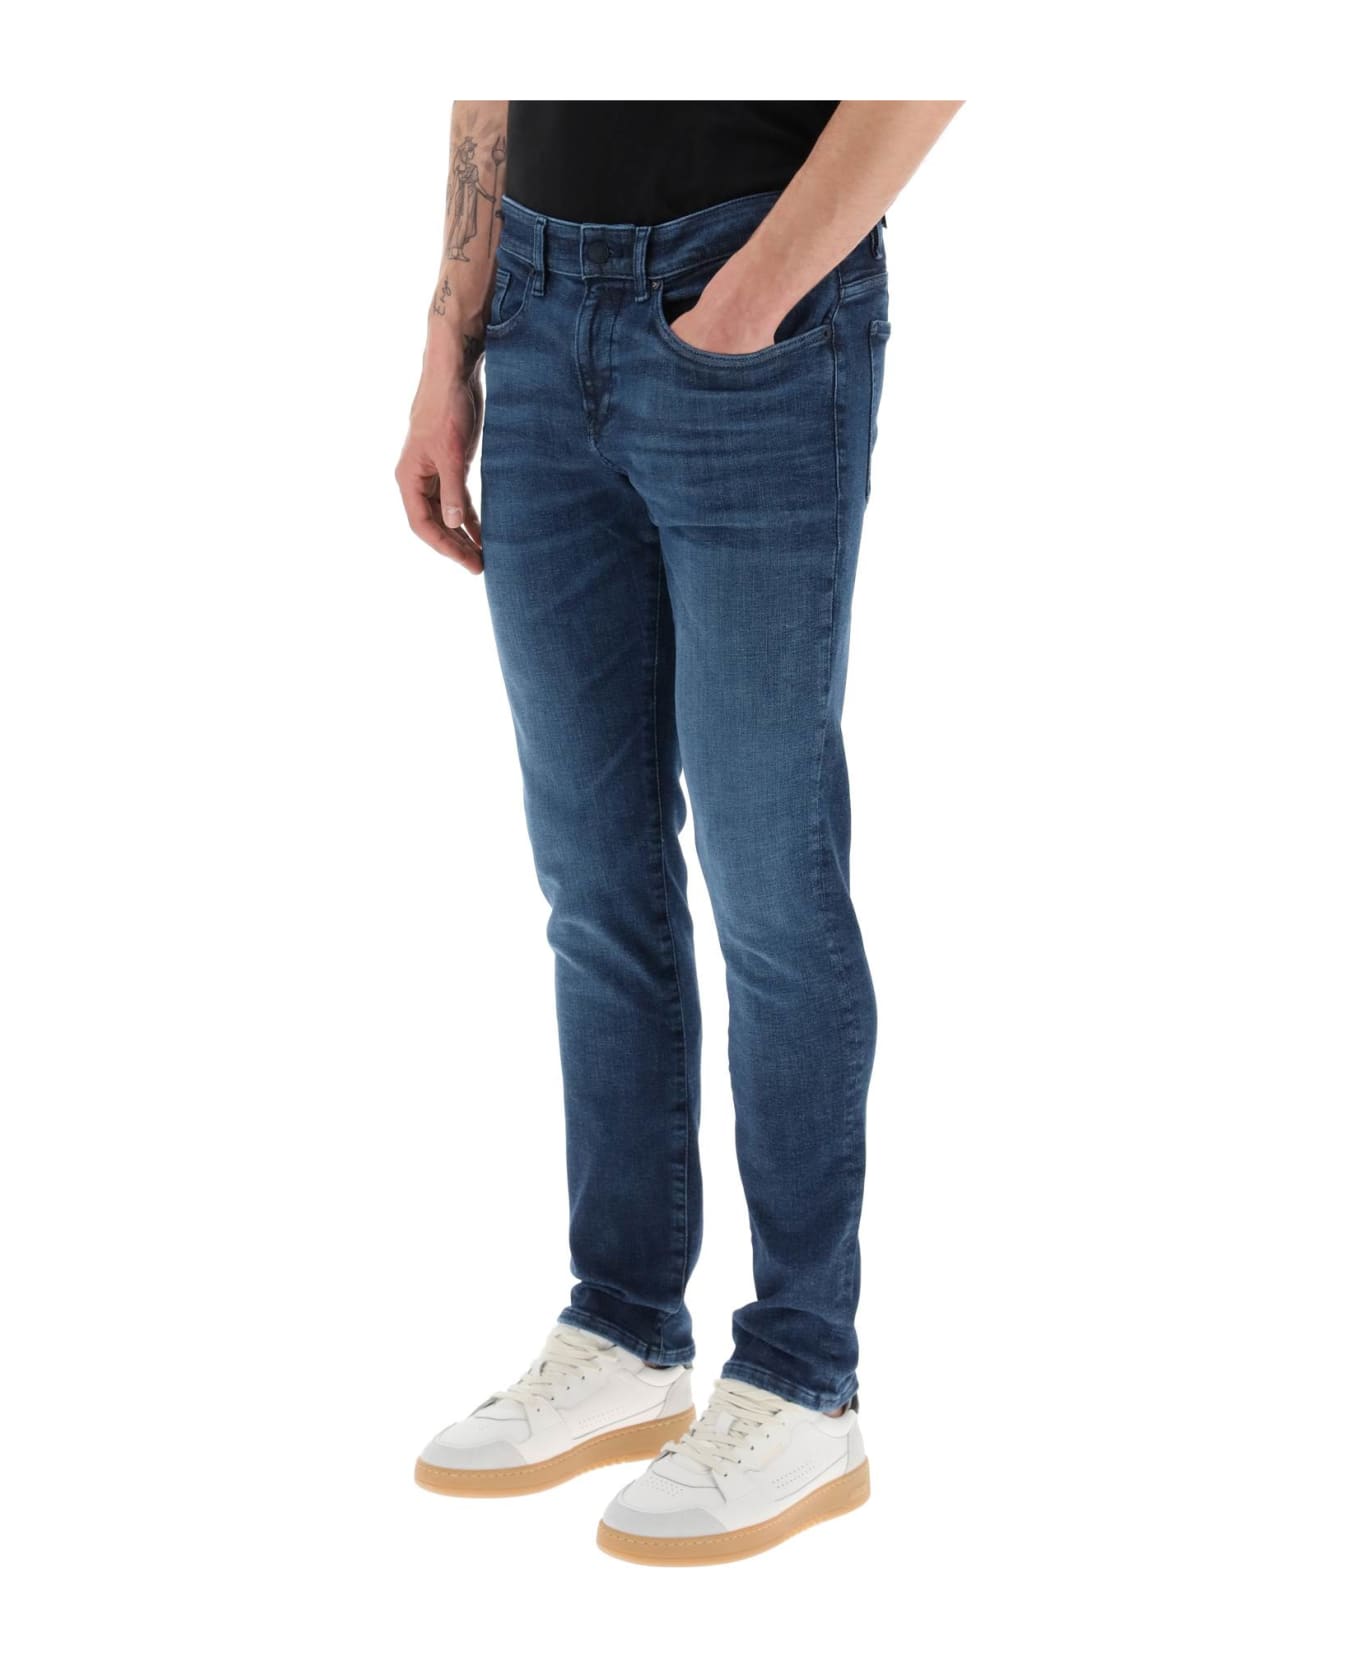 Hugo Boss Delaware Slim Fit Jeans - MEDIUM BLUE (Blue)